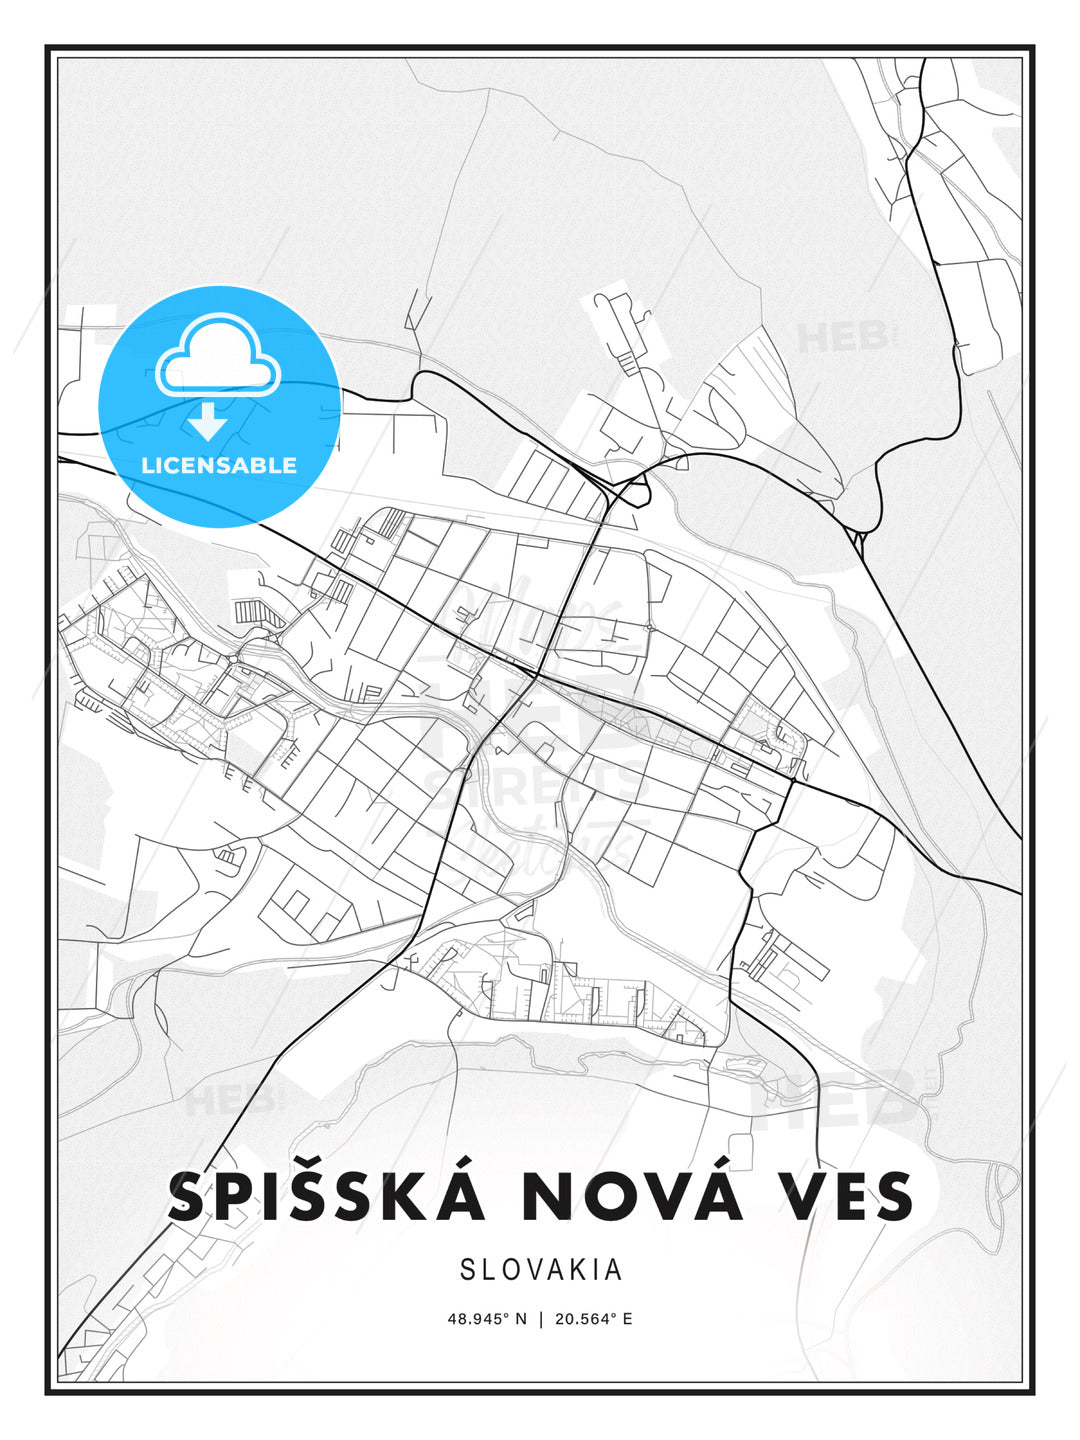 Spišská Nová Ves, Slovakia, Modern Print Template in Various Formats - HEBSTREITS Sketches